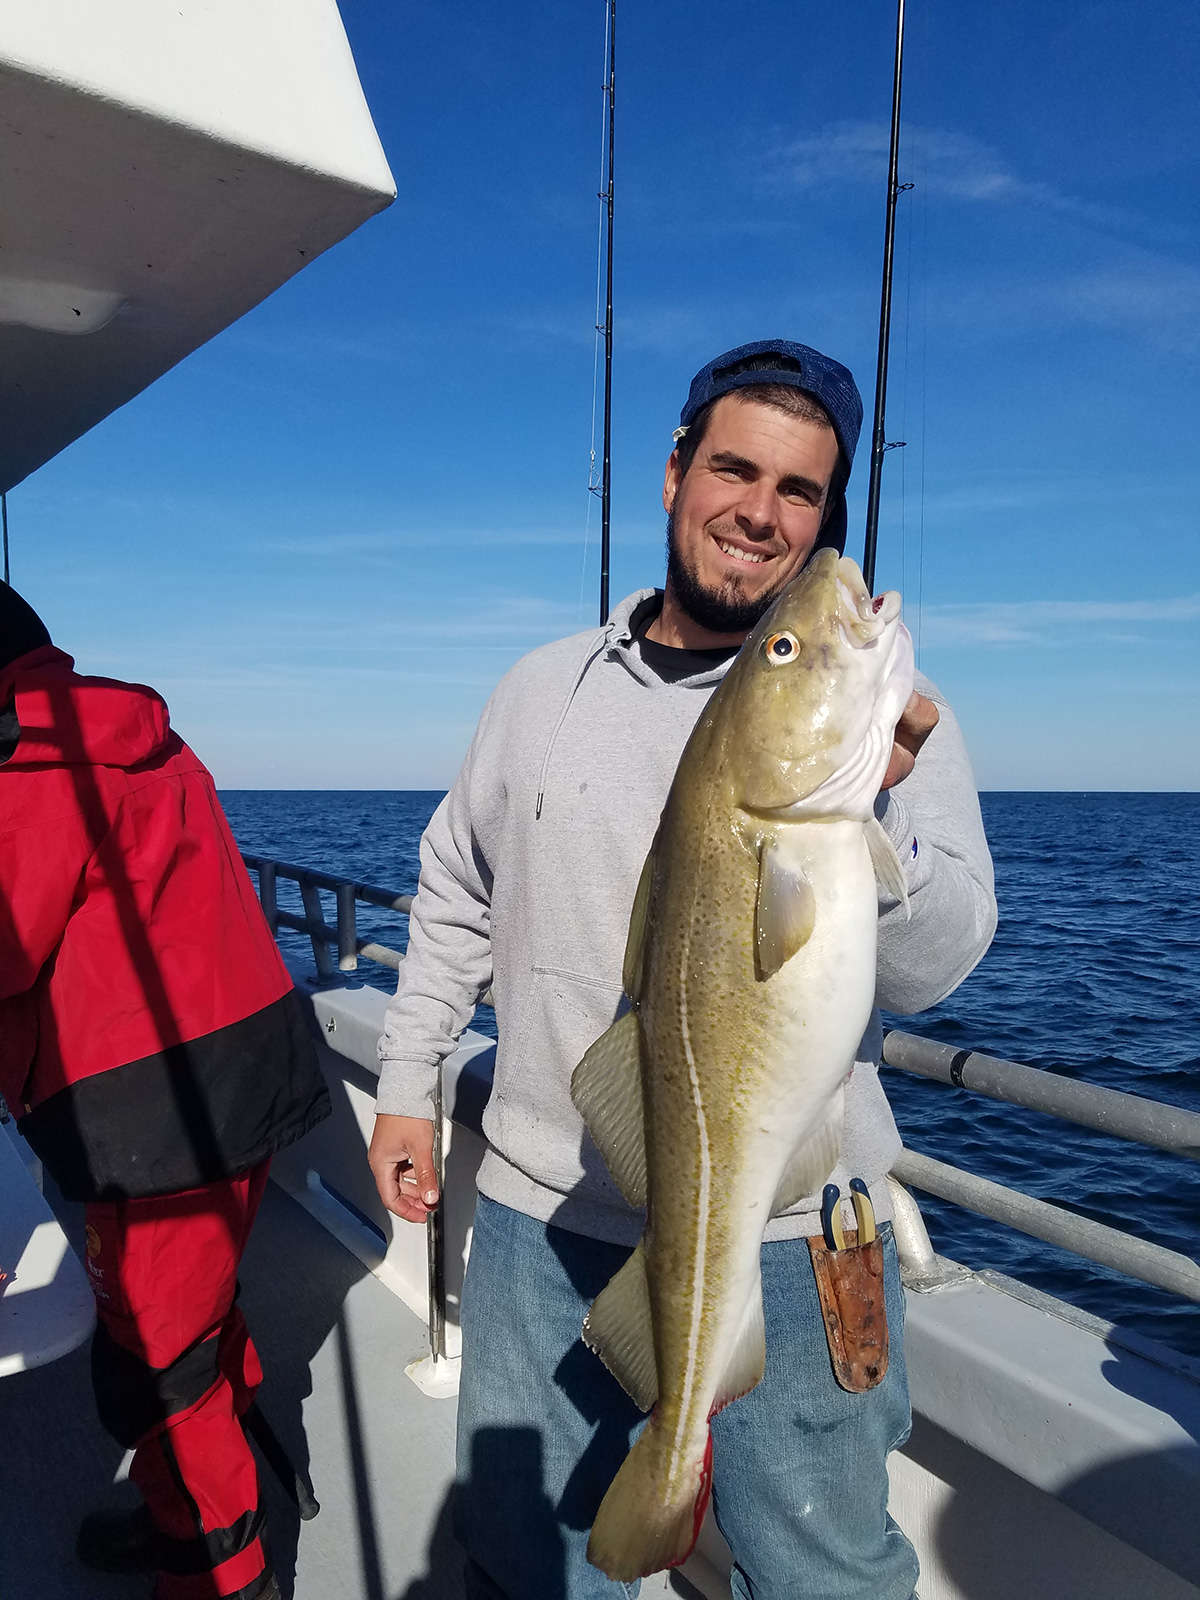 https://www.thefisherman.com/wp-content/uploads/2019/02/2018-1-optimize-your-cod-success-catch.jpg